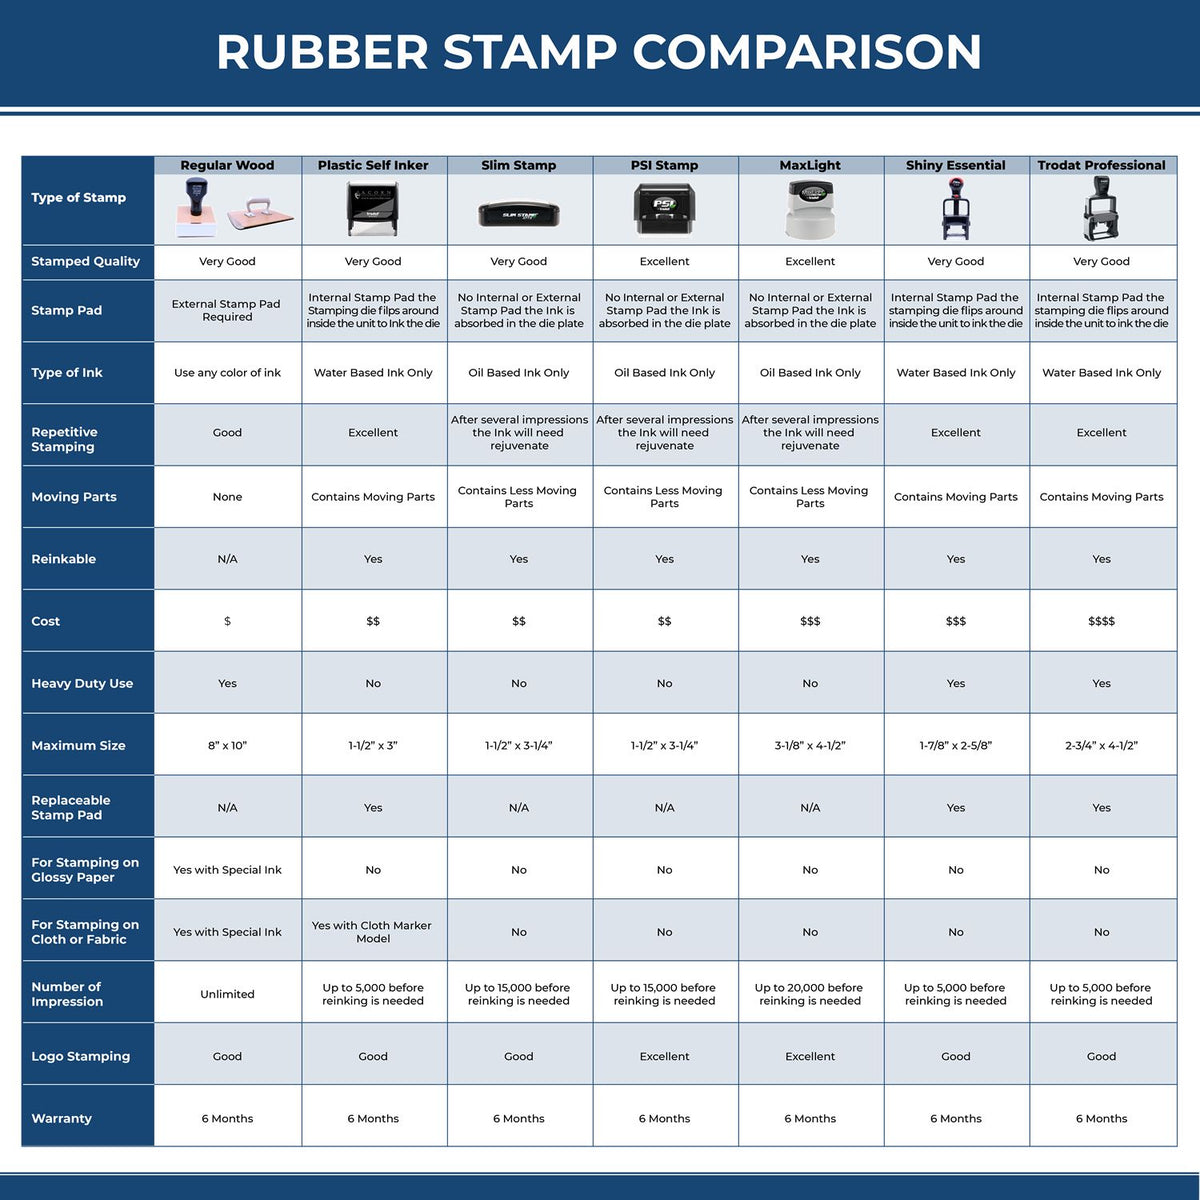 Unofficial Transcript Rubber Stamp 4369R Rubber Stamp Comparison